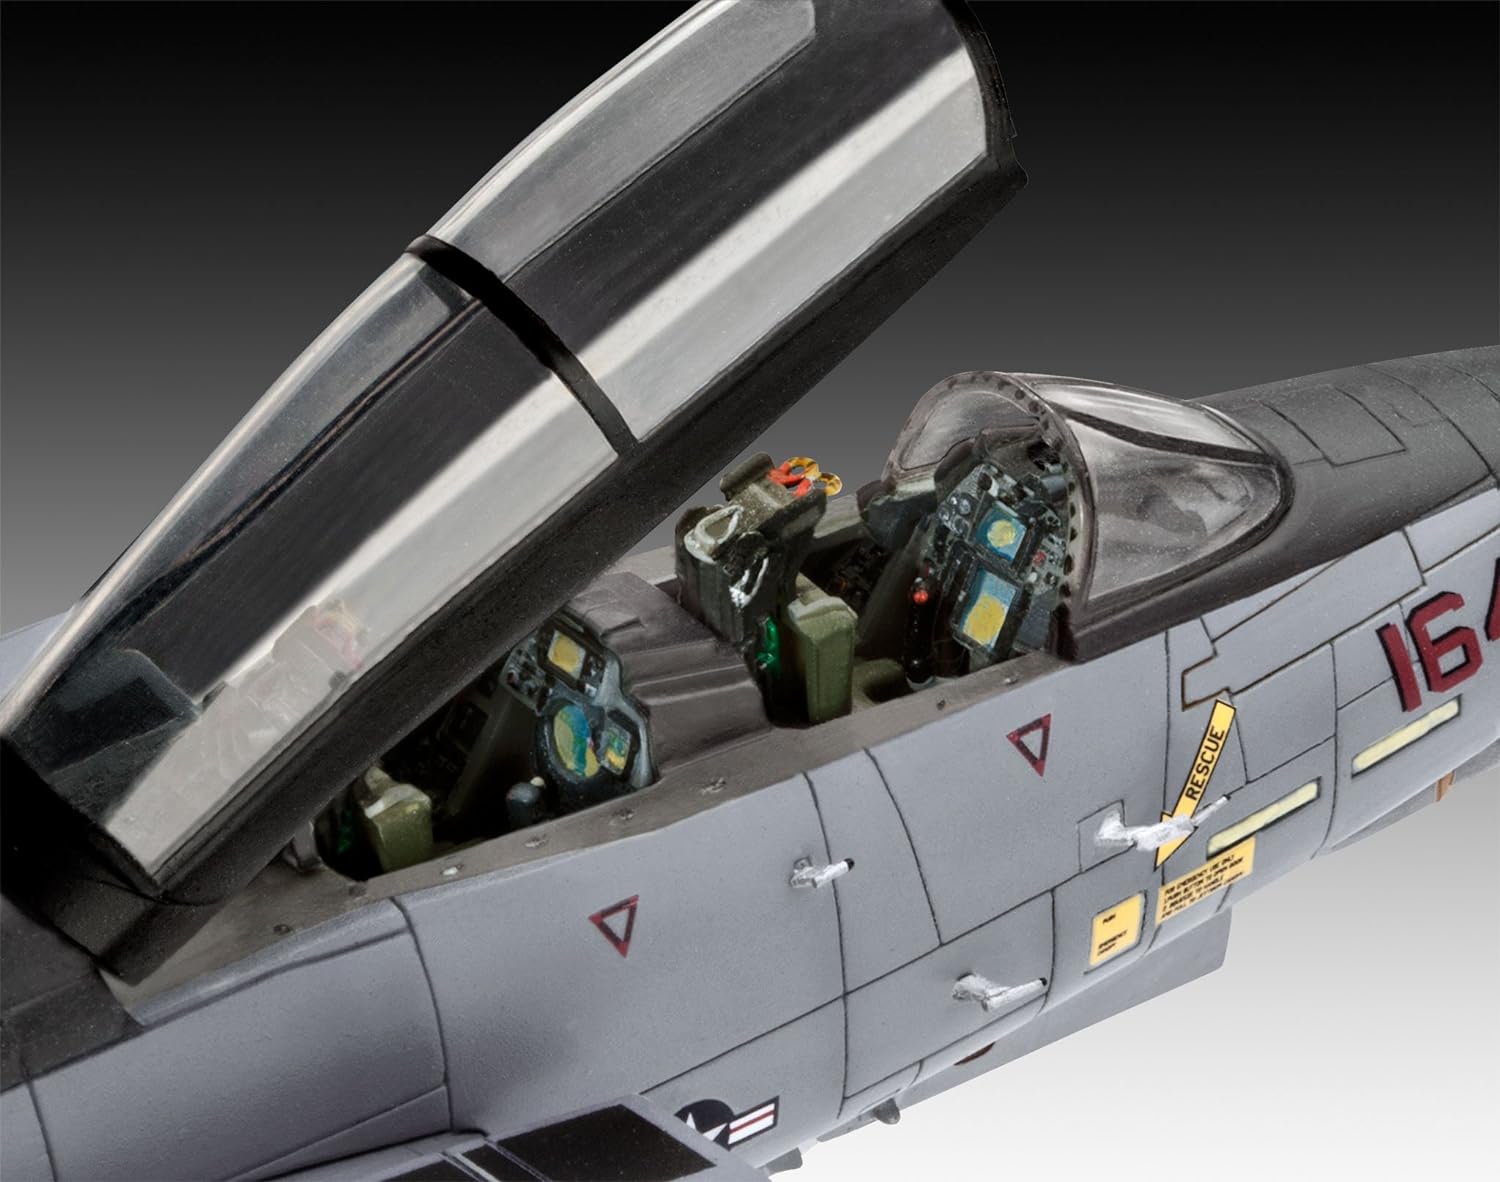 F-14D Super Ca Model Set 1:72 Scale Kit